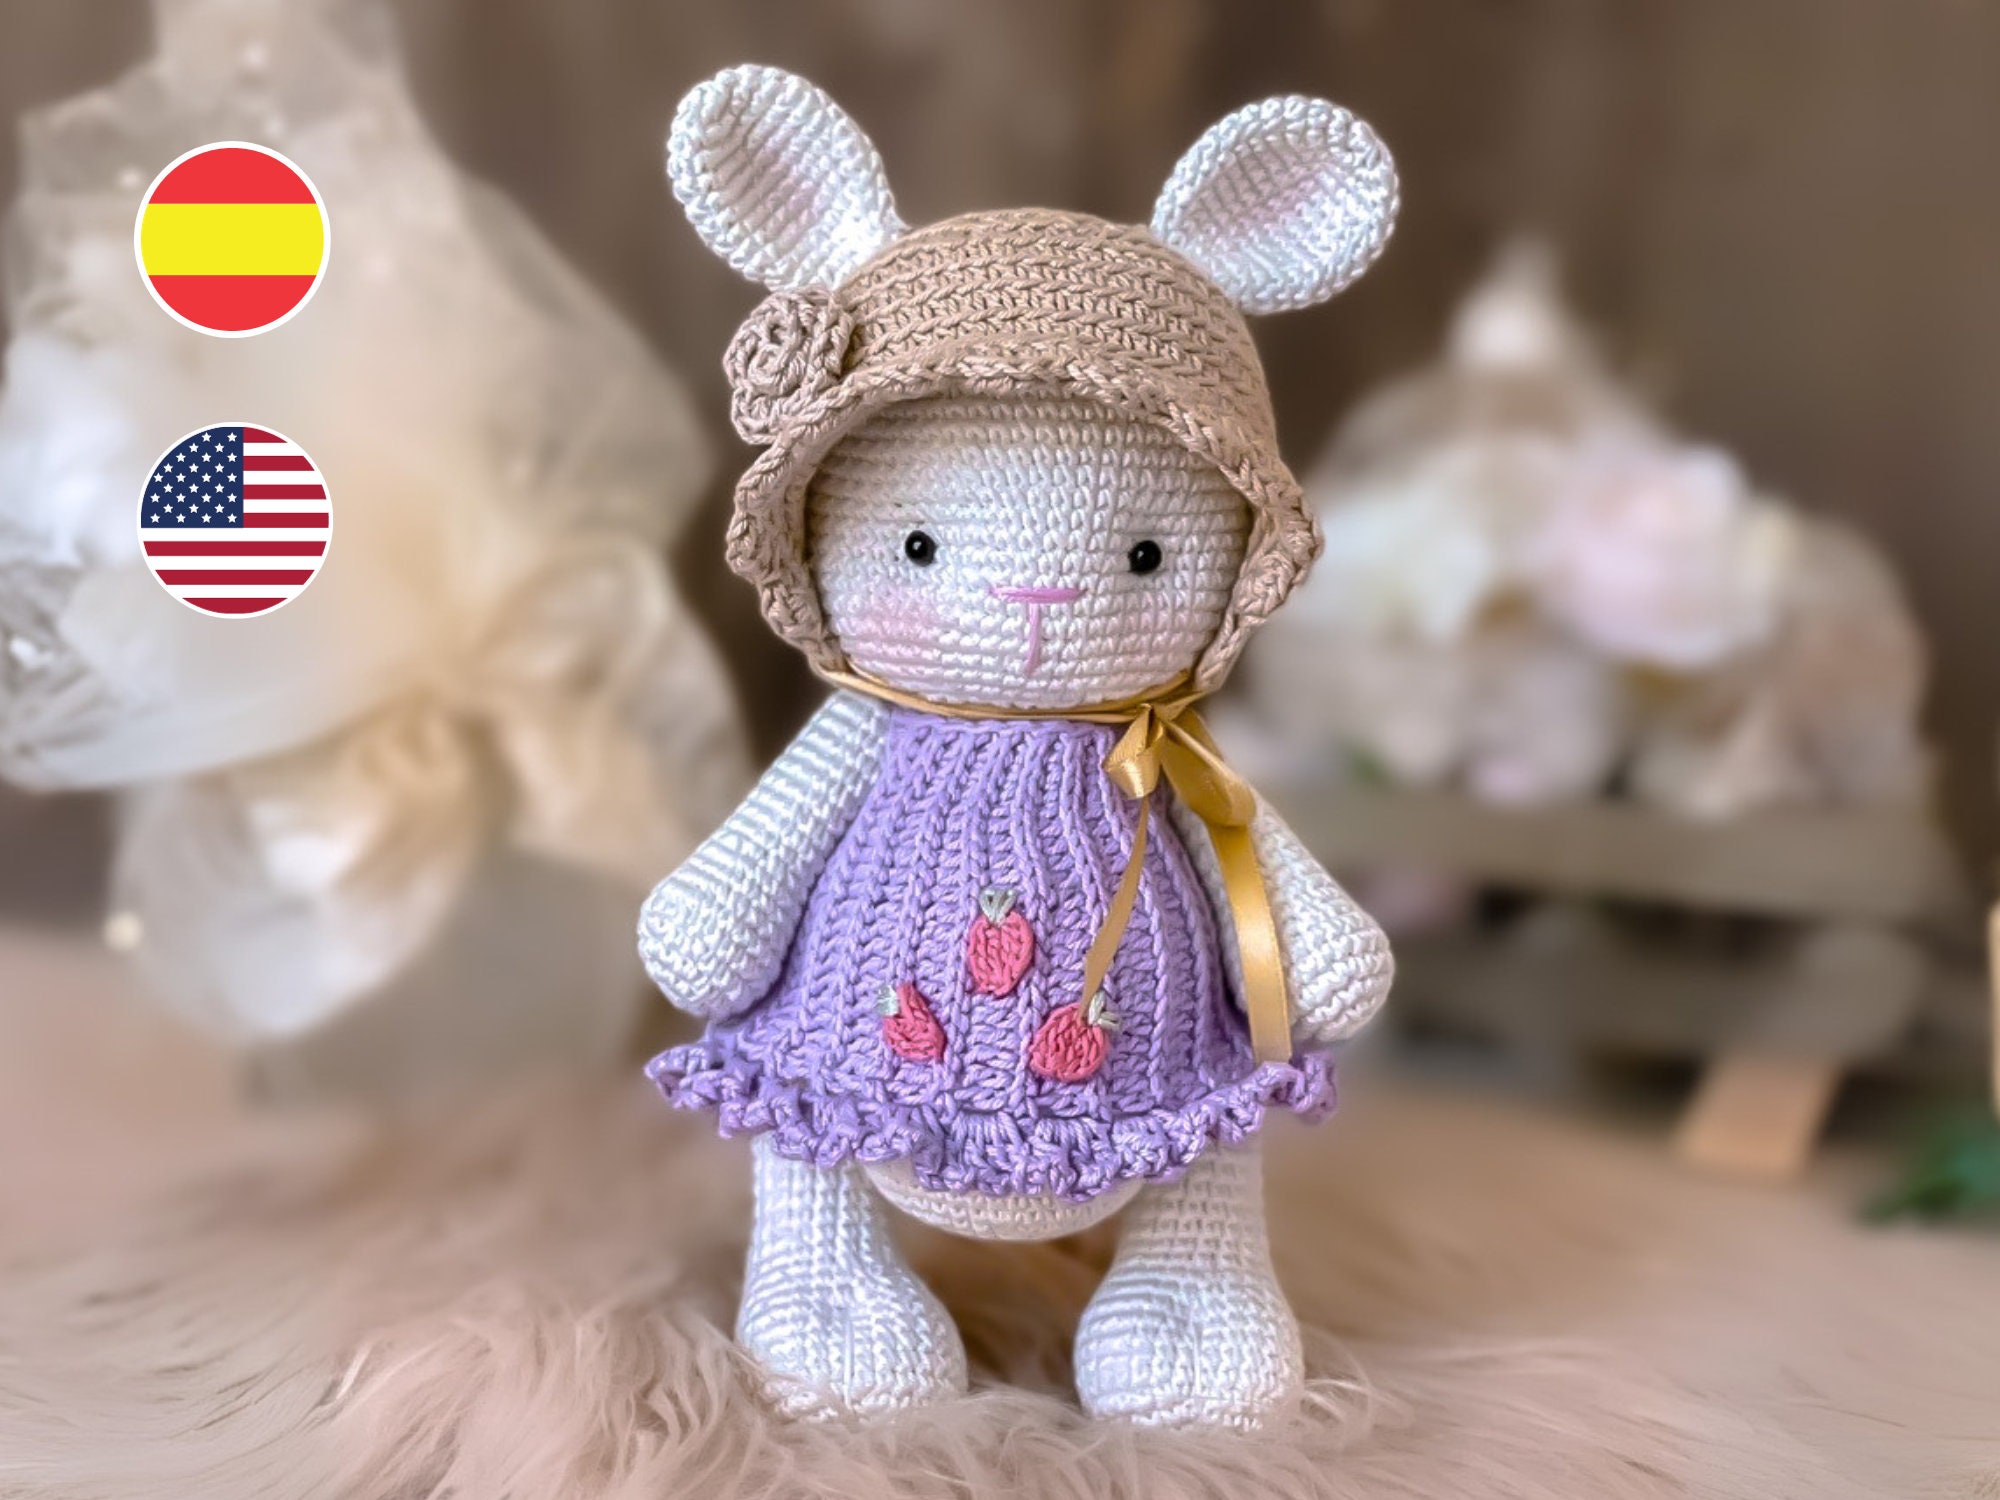 Amigurumi Crochet Pattern Honey the Bunny Rabbit Doll ENGLISH ONLY 